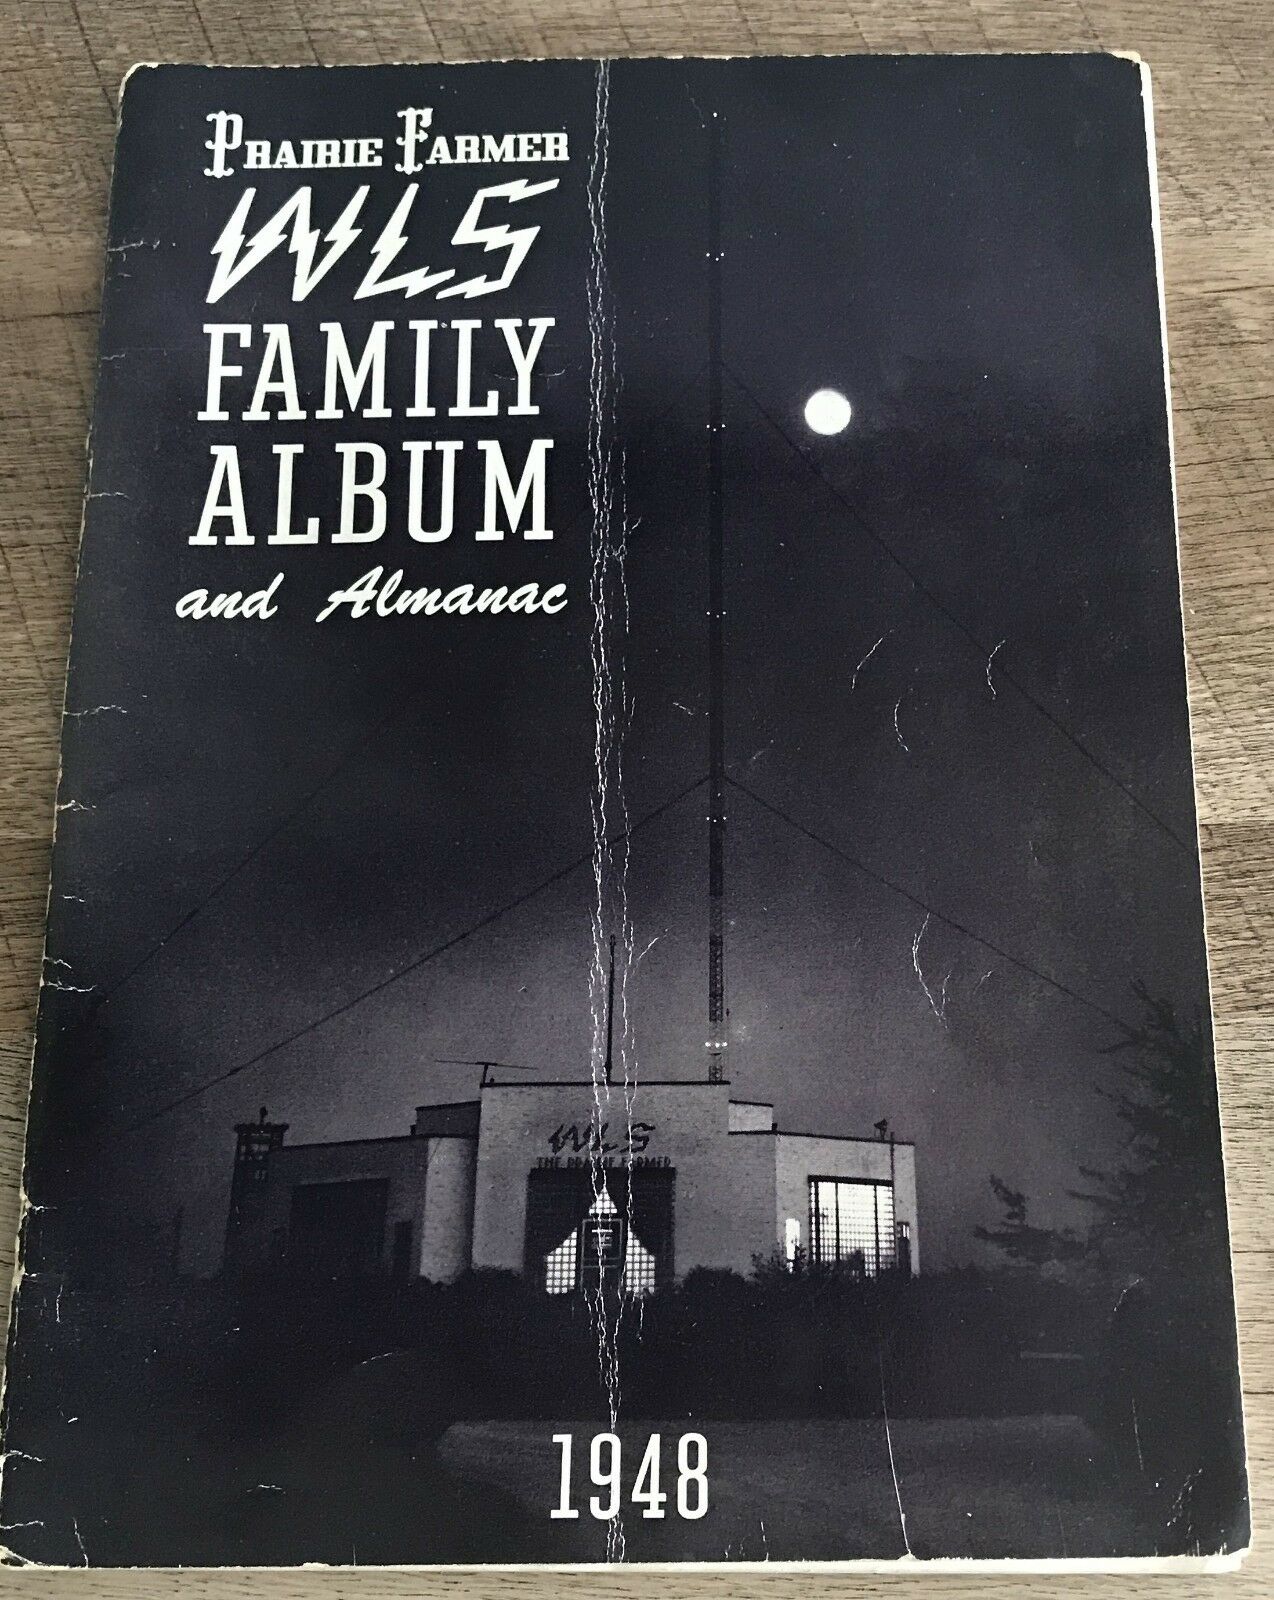 Wls Family Prairie Farmer Family Album & Almanac 1948 Country Radio Station Book